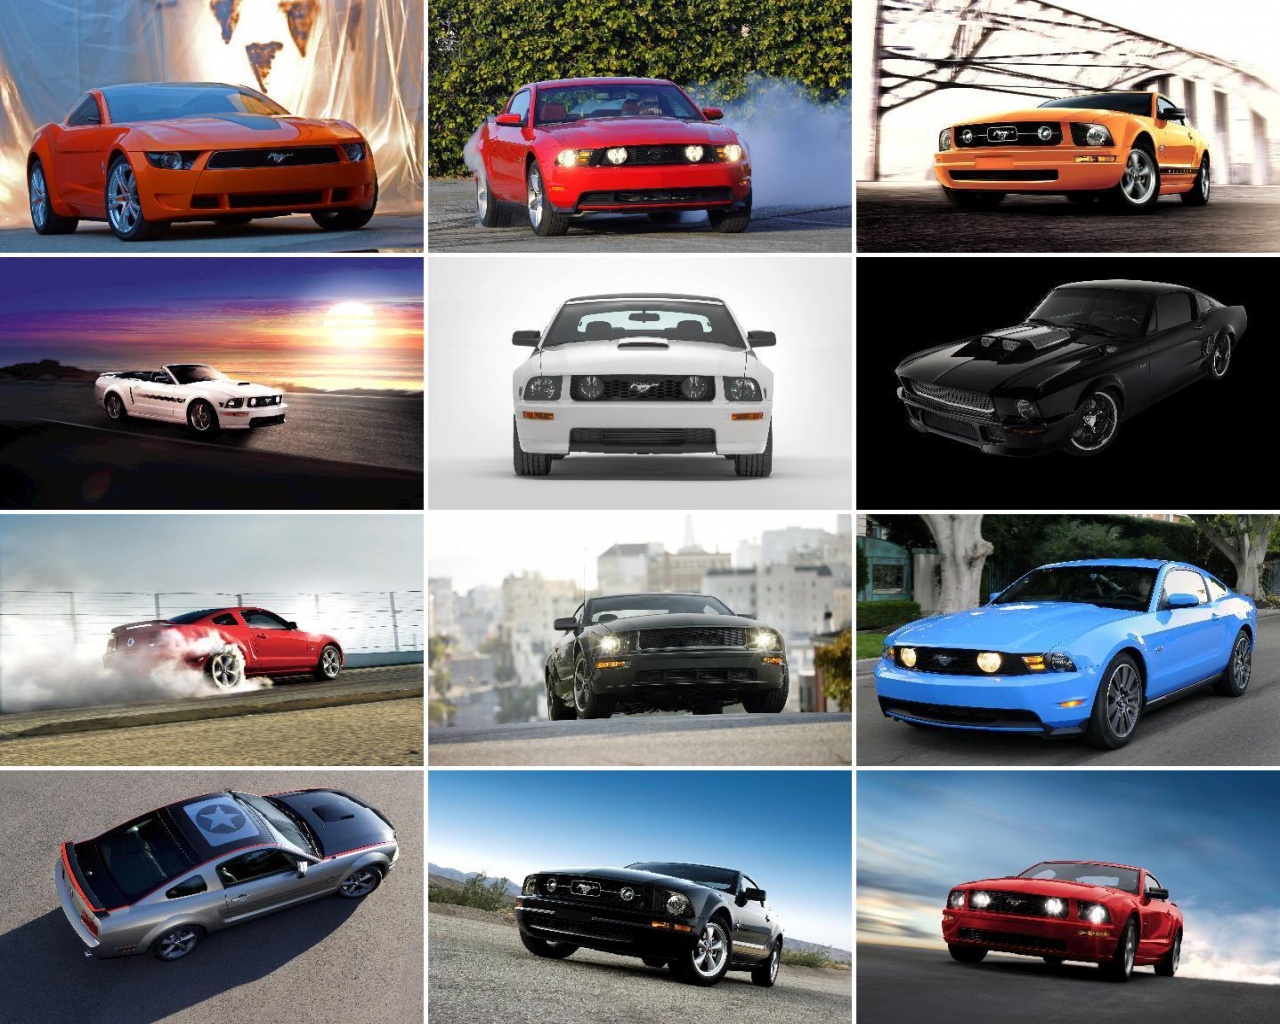 Mustang GT Desktop Wallpaper and Screensavers Free Downloads